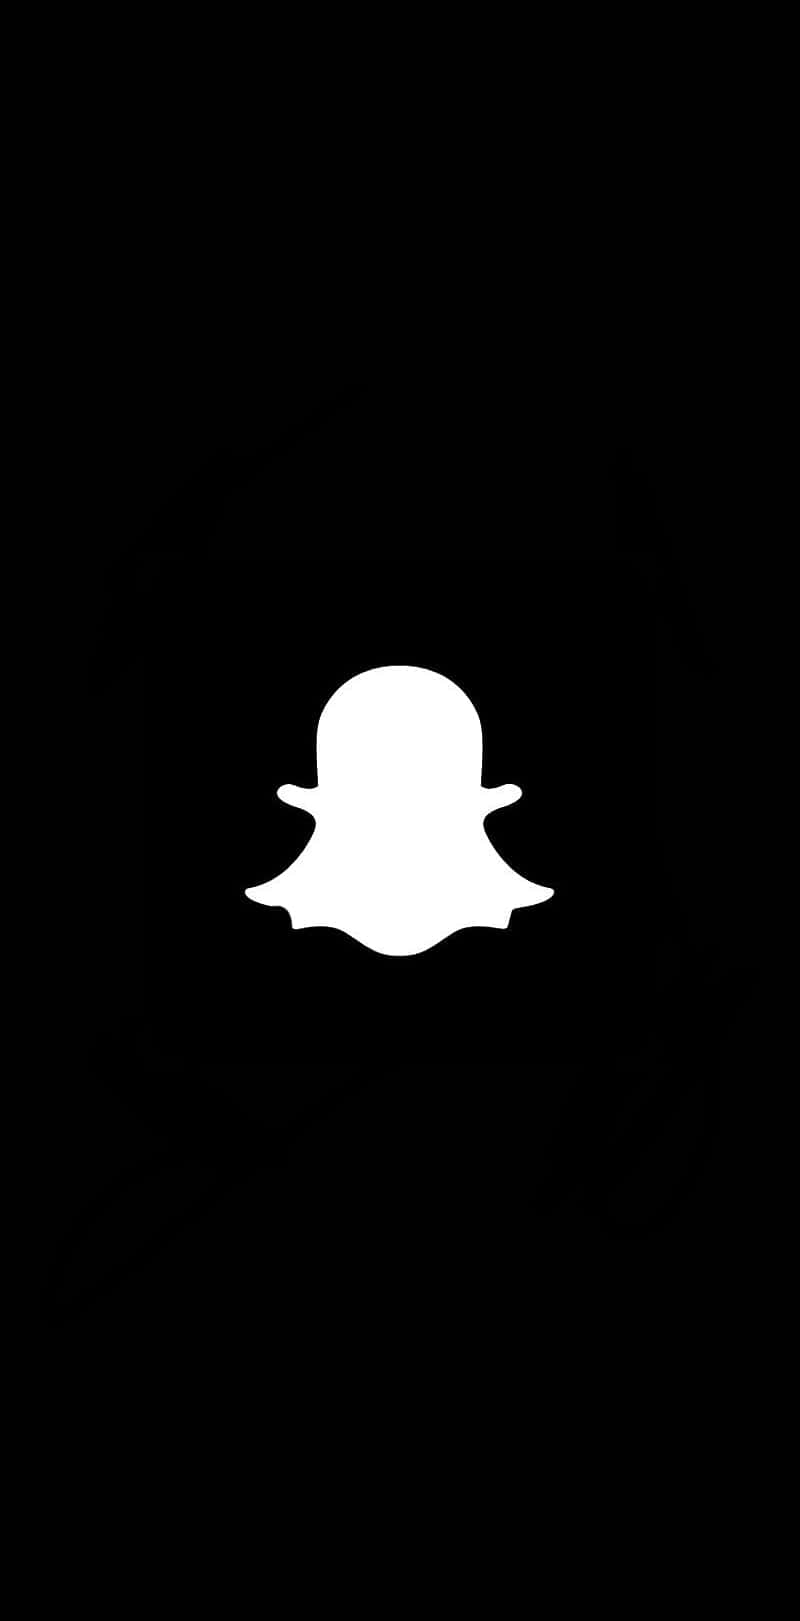 Snapchat Logo On A Black Background